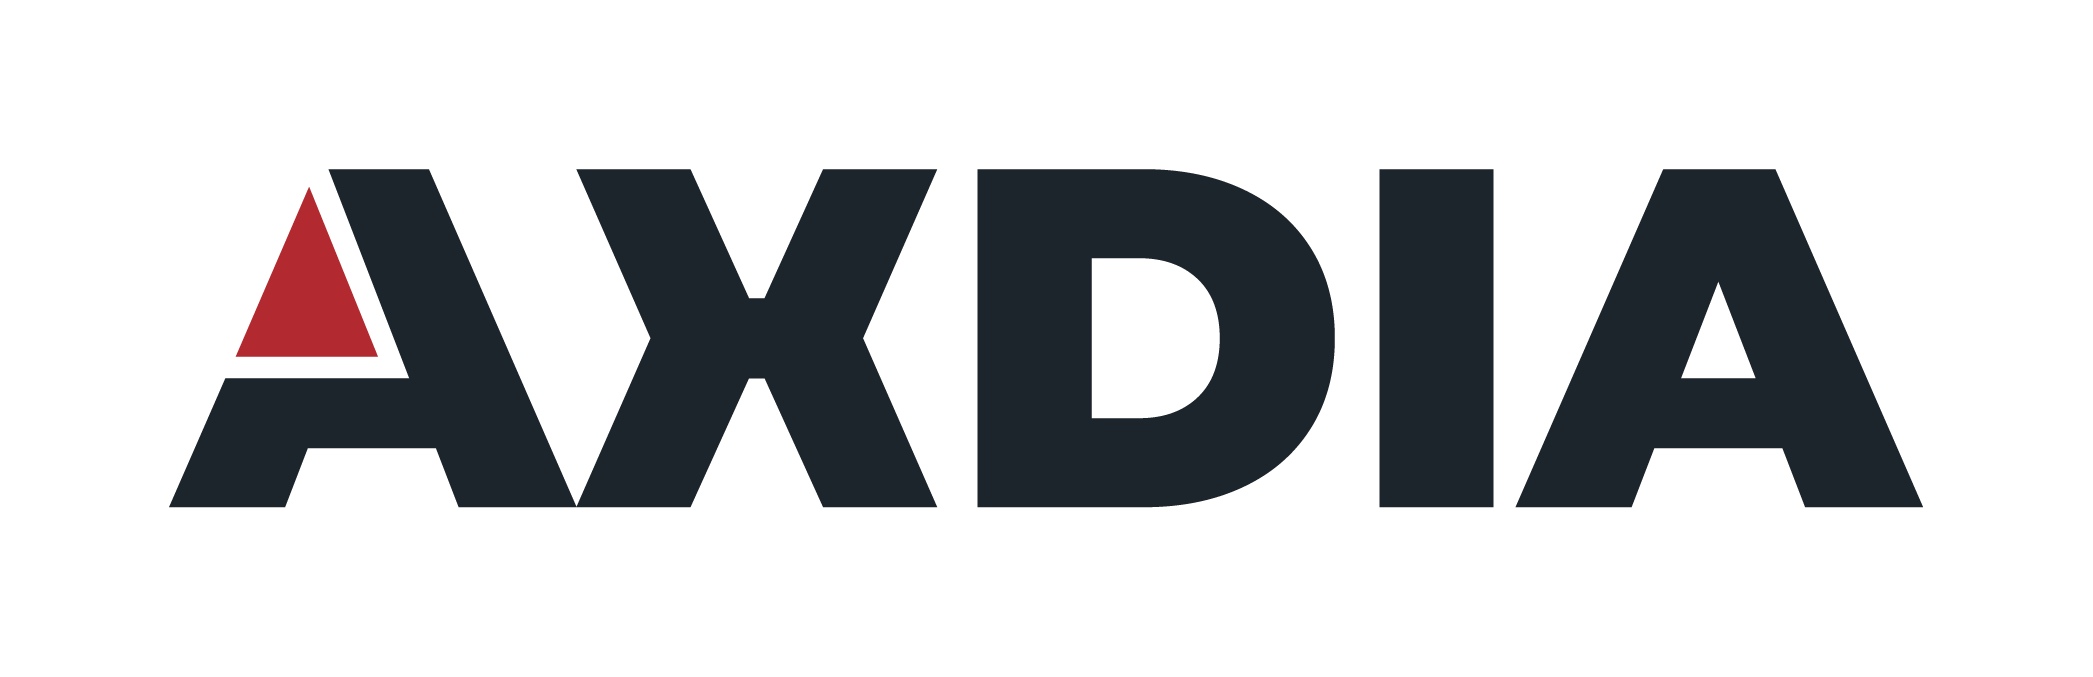 AXDIA International GmbH